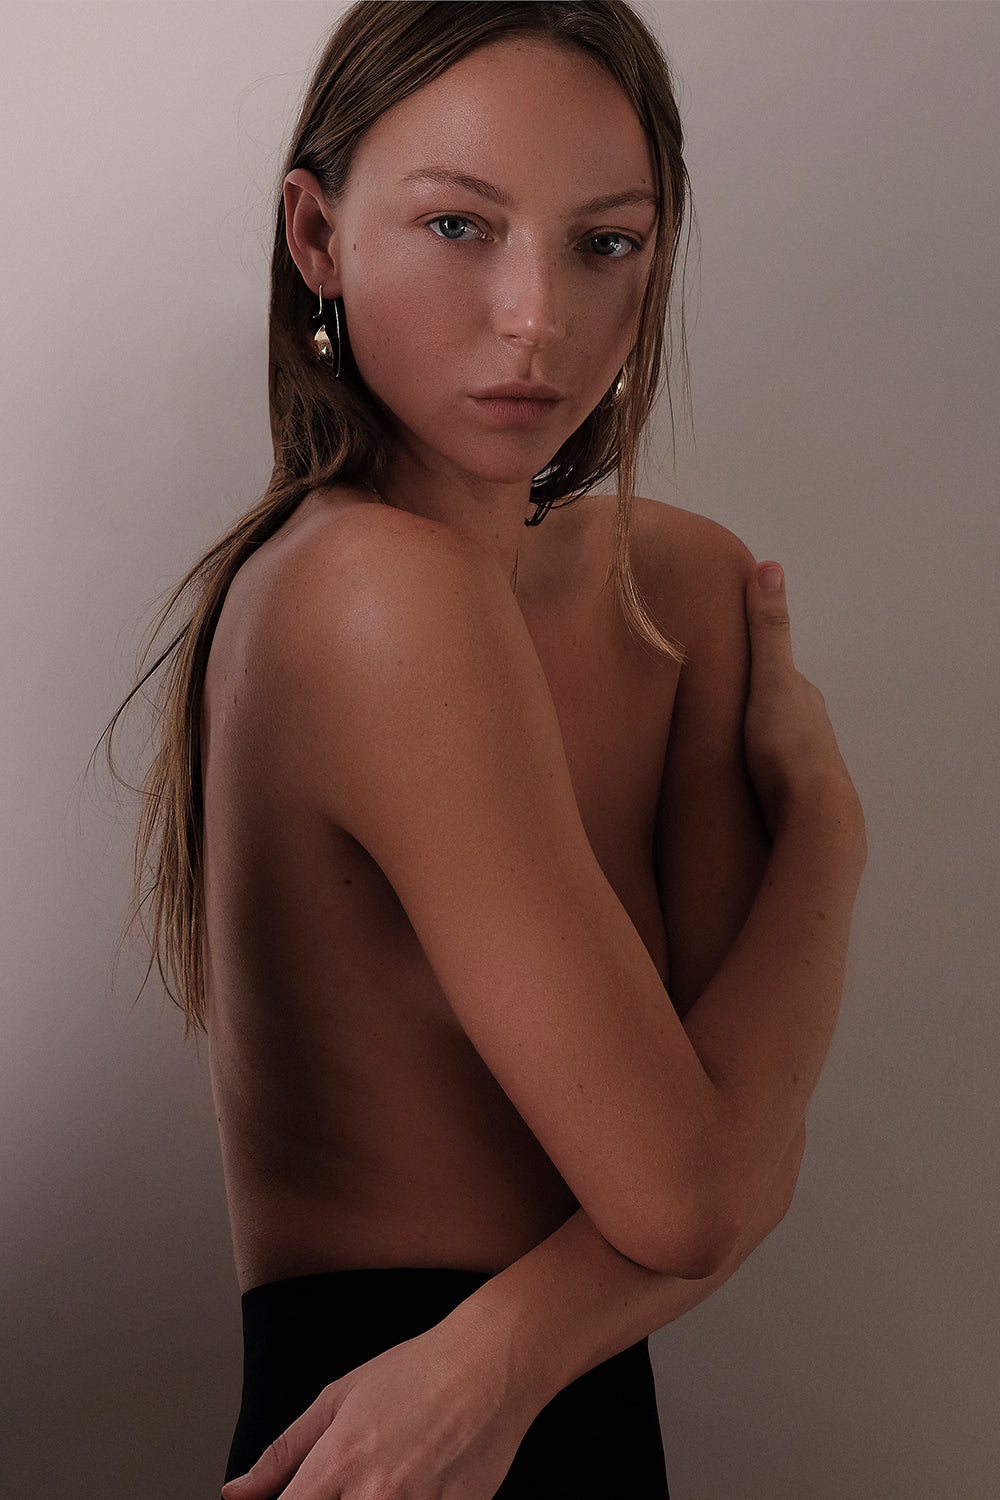 Marion Earrings | 9K Yellow Gold| Natasha Schweitzer